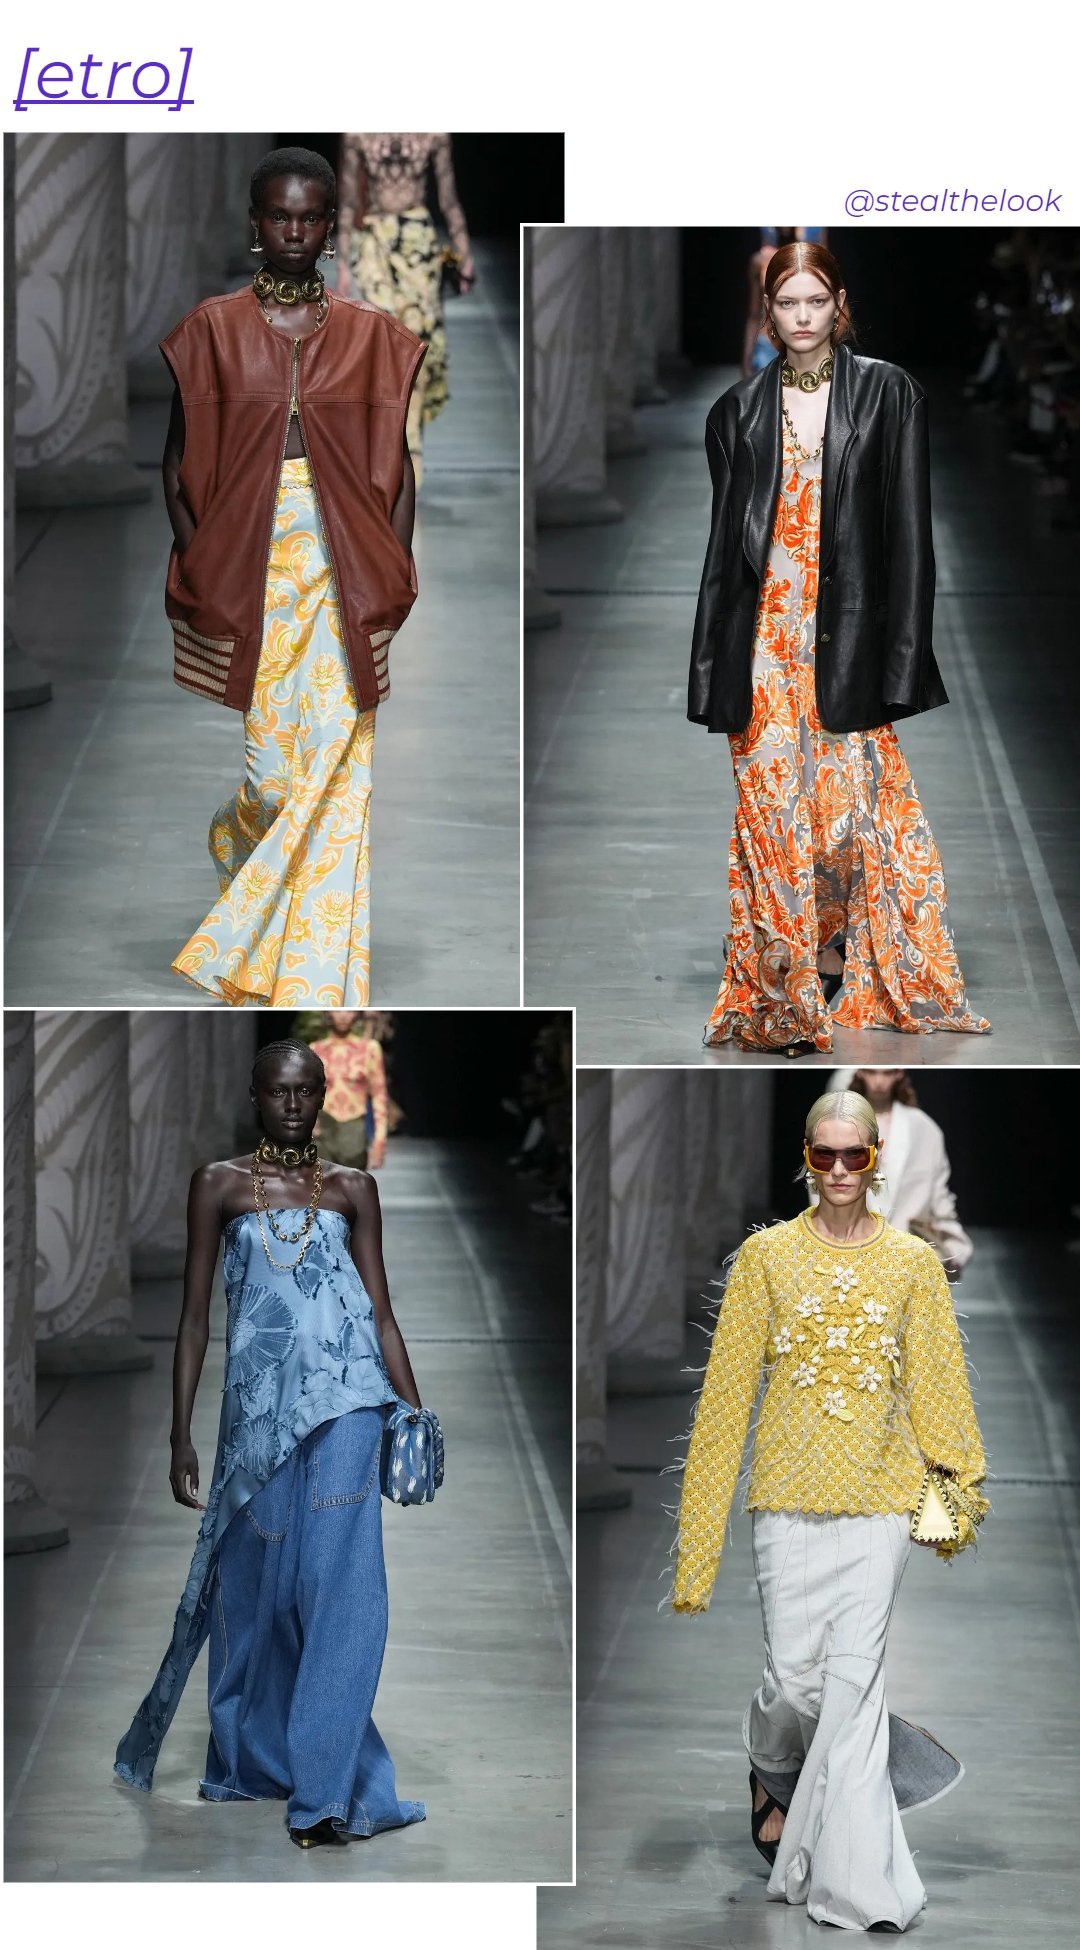 Etro - roupas diversas - Milano Fashion Week - primavera - colagem de imagens - https://stealthelook.com.br